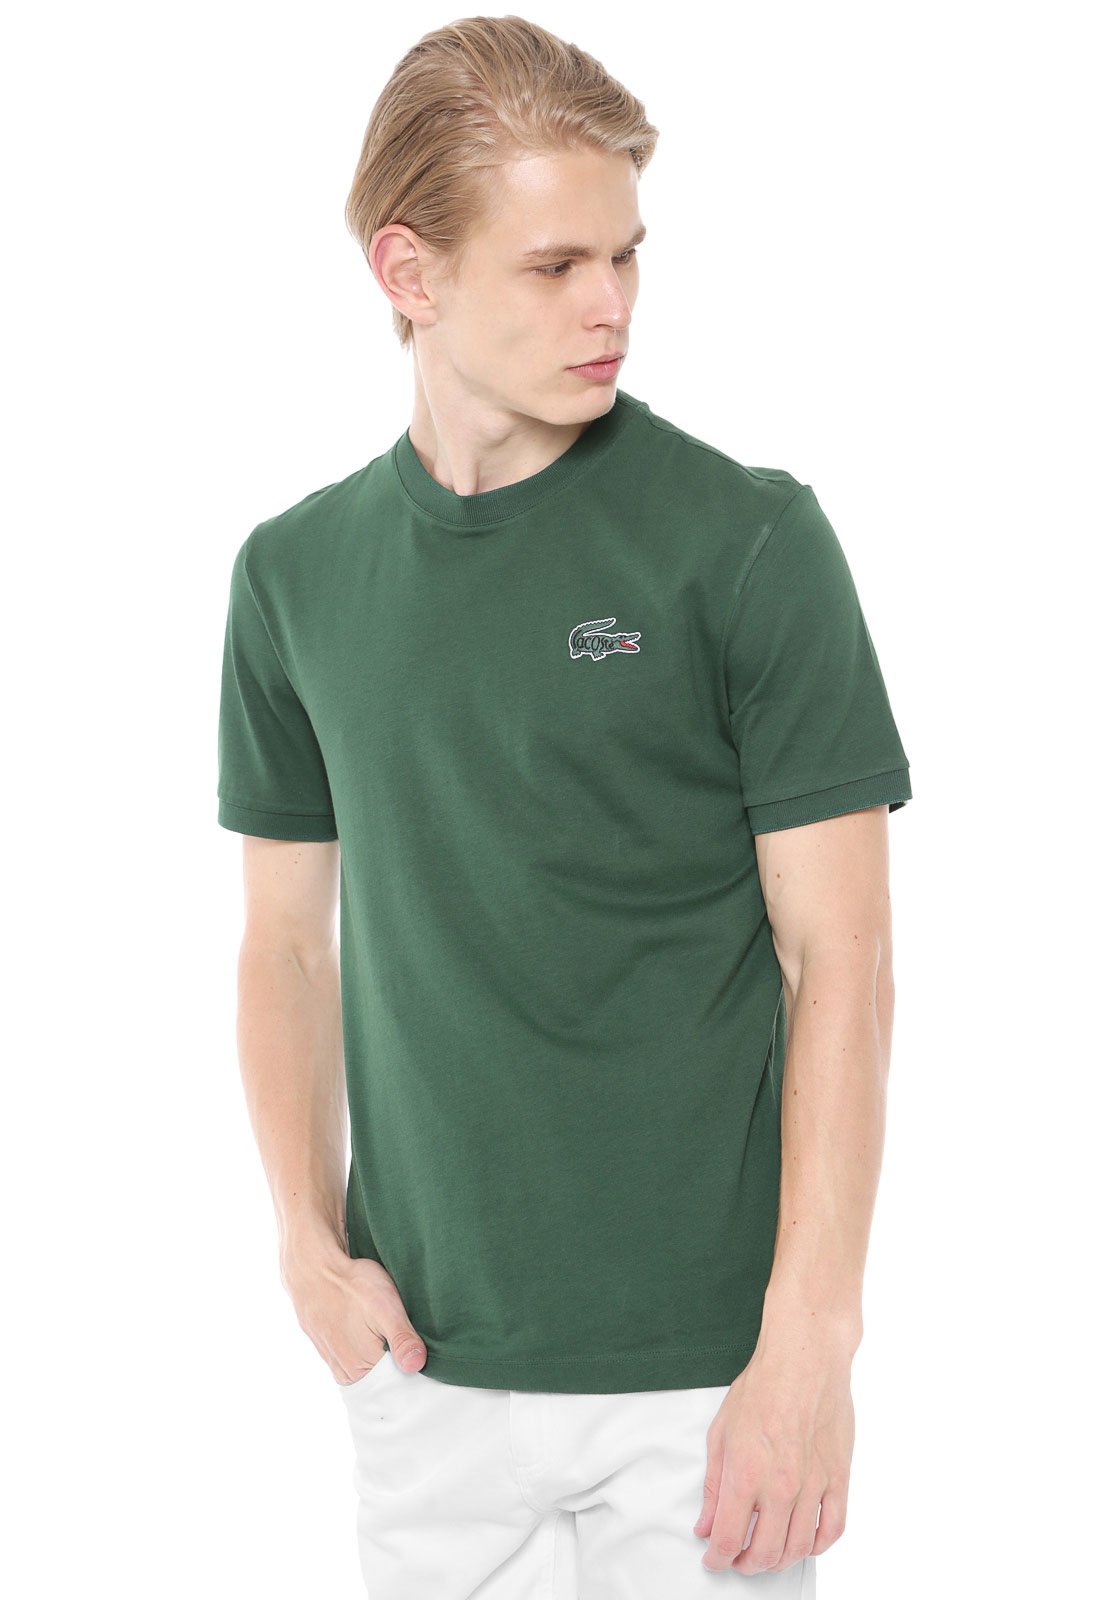 Camiseta Lacoste Básica Verde Compre Agora Kanui Brasil